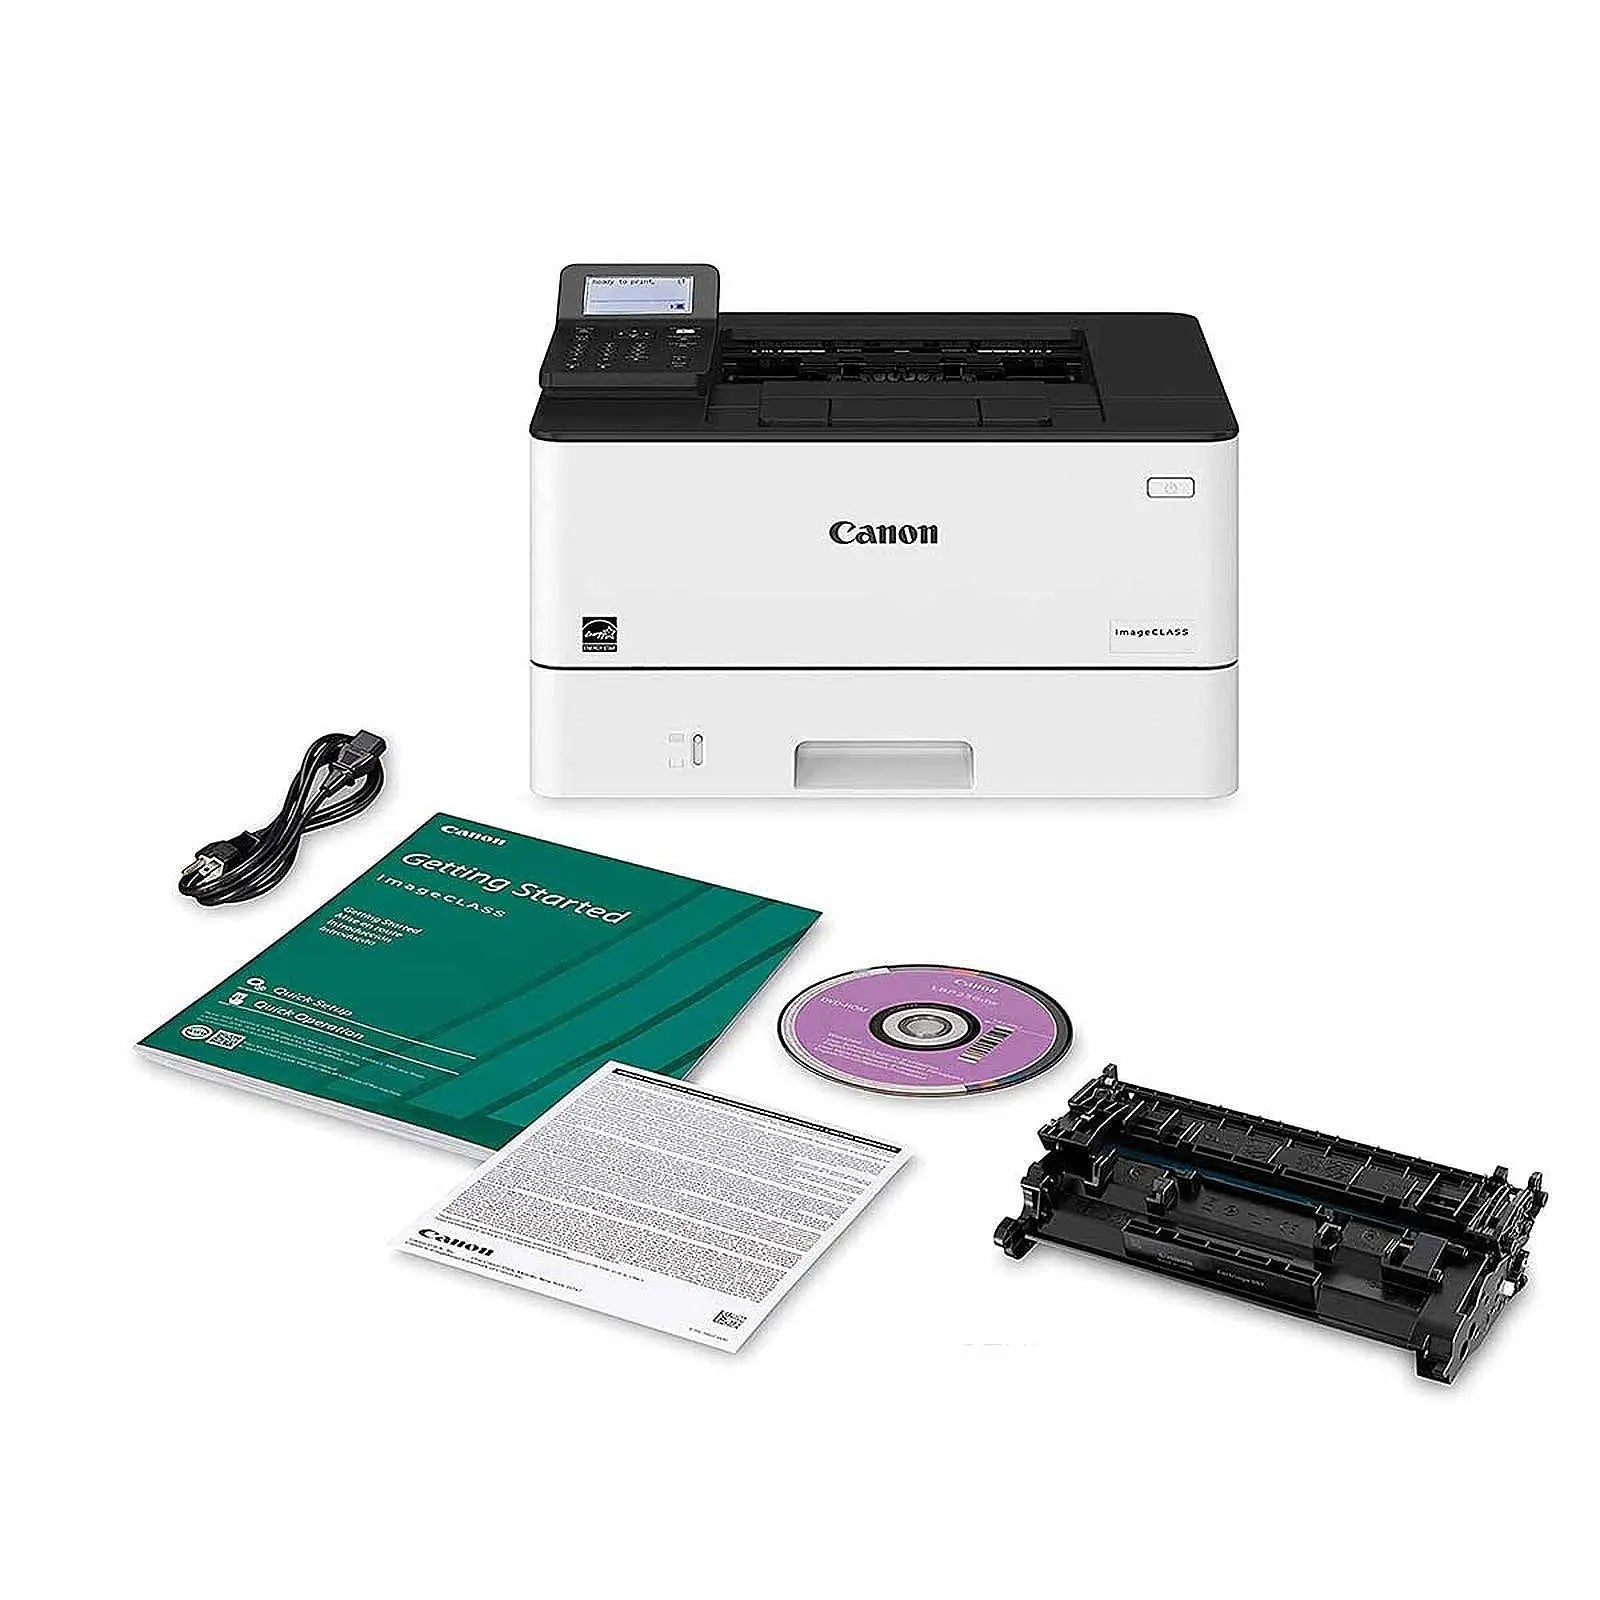 Imprimante CANON Laser I-SENSYS Monofonction